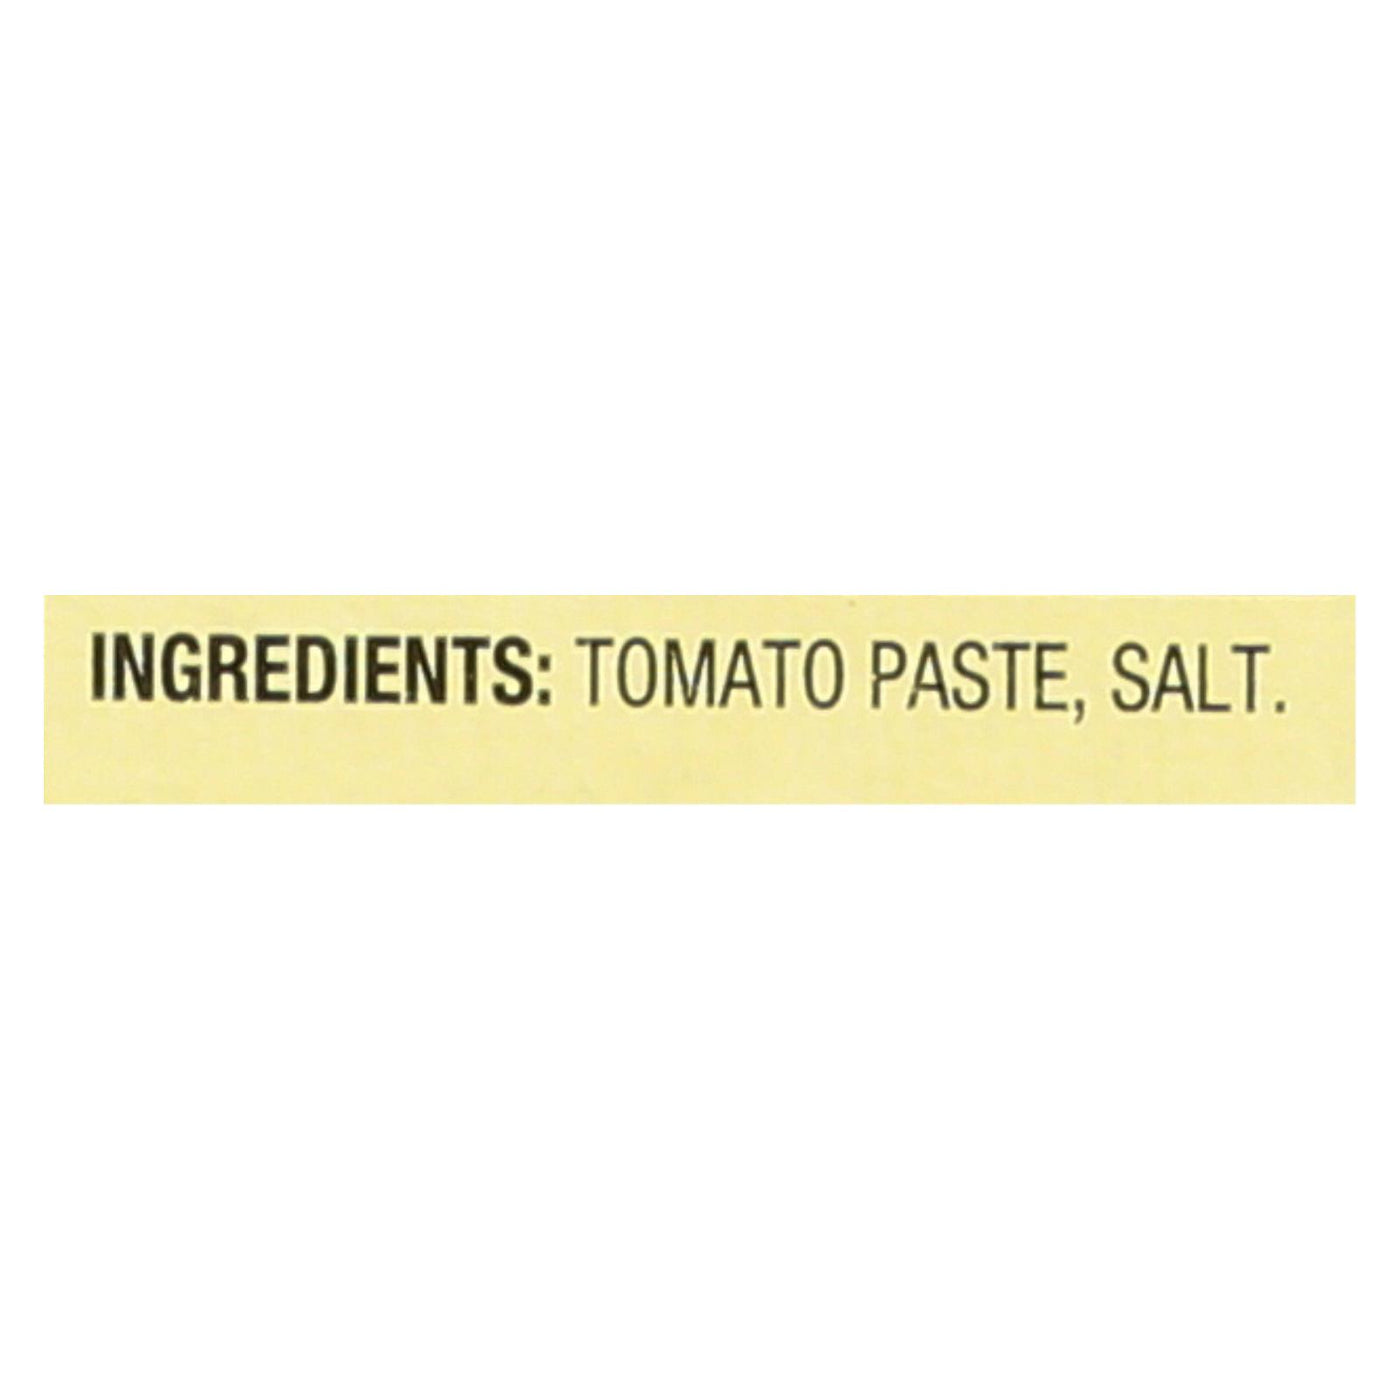 Cento - Tomato Paste - Tube - Case Of 12 - 4.56 Oz. | OnlyNaturals.us